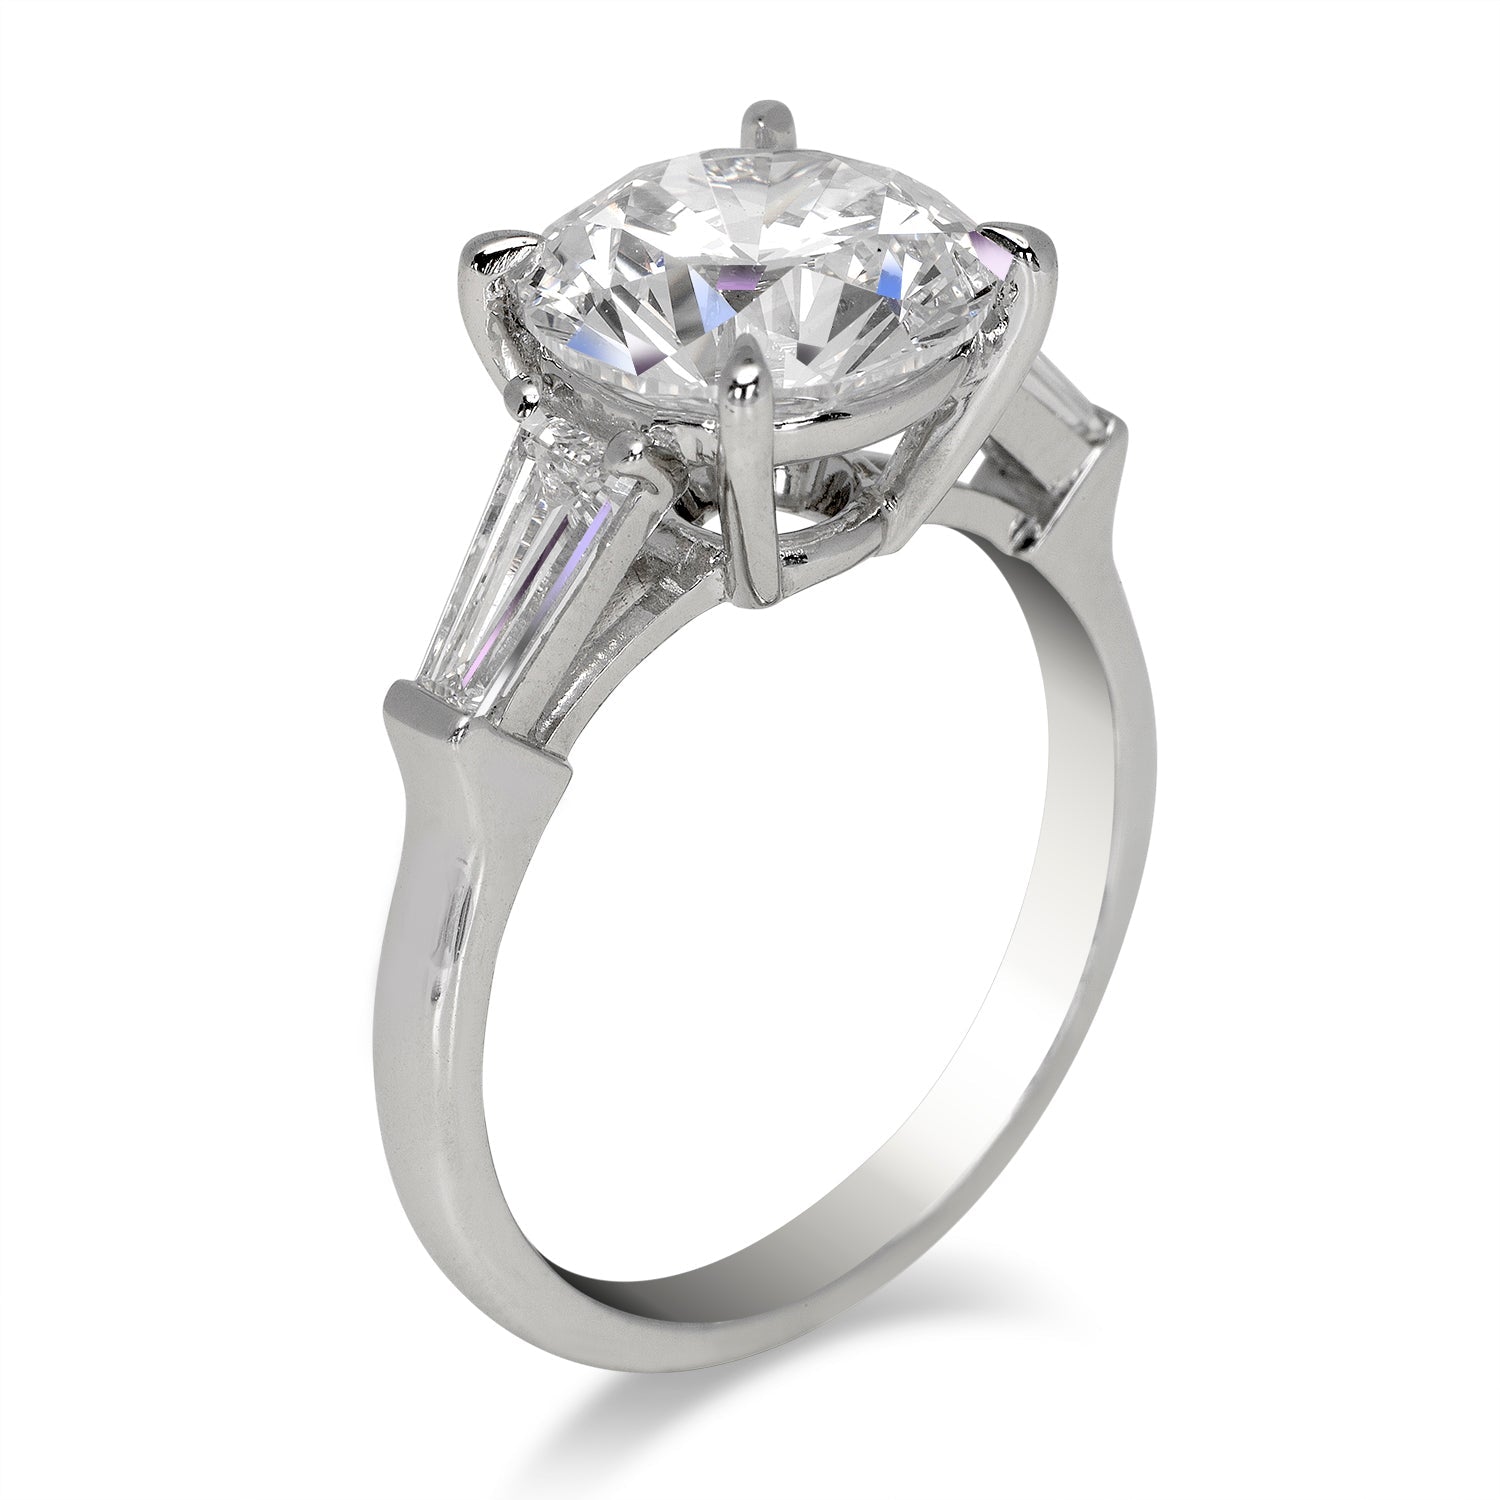 4 Carat Diamond Ring: Buying Guide | Essilux